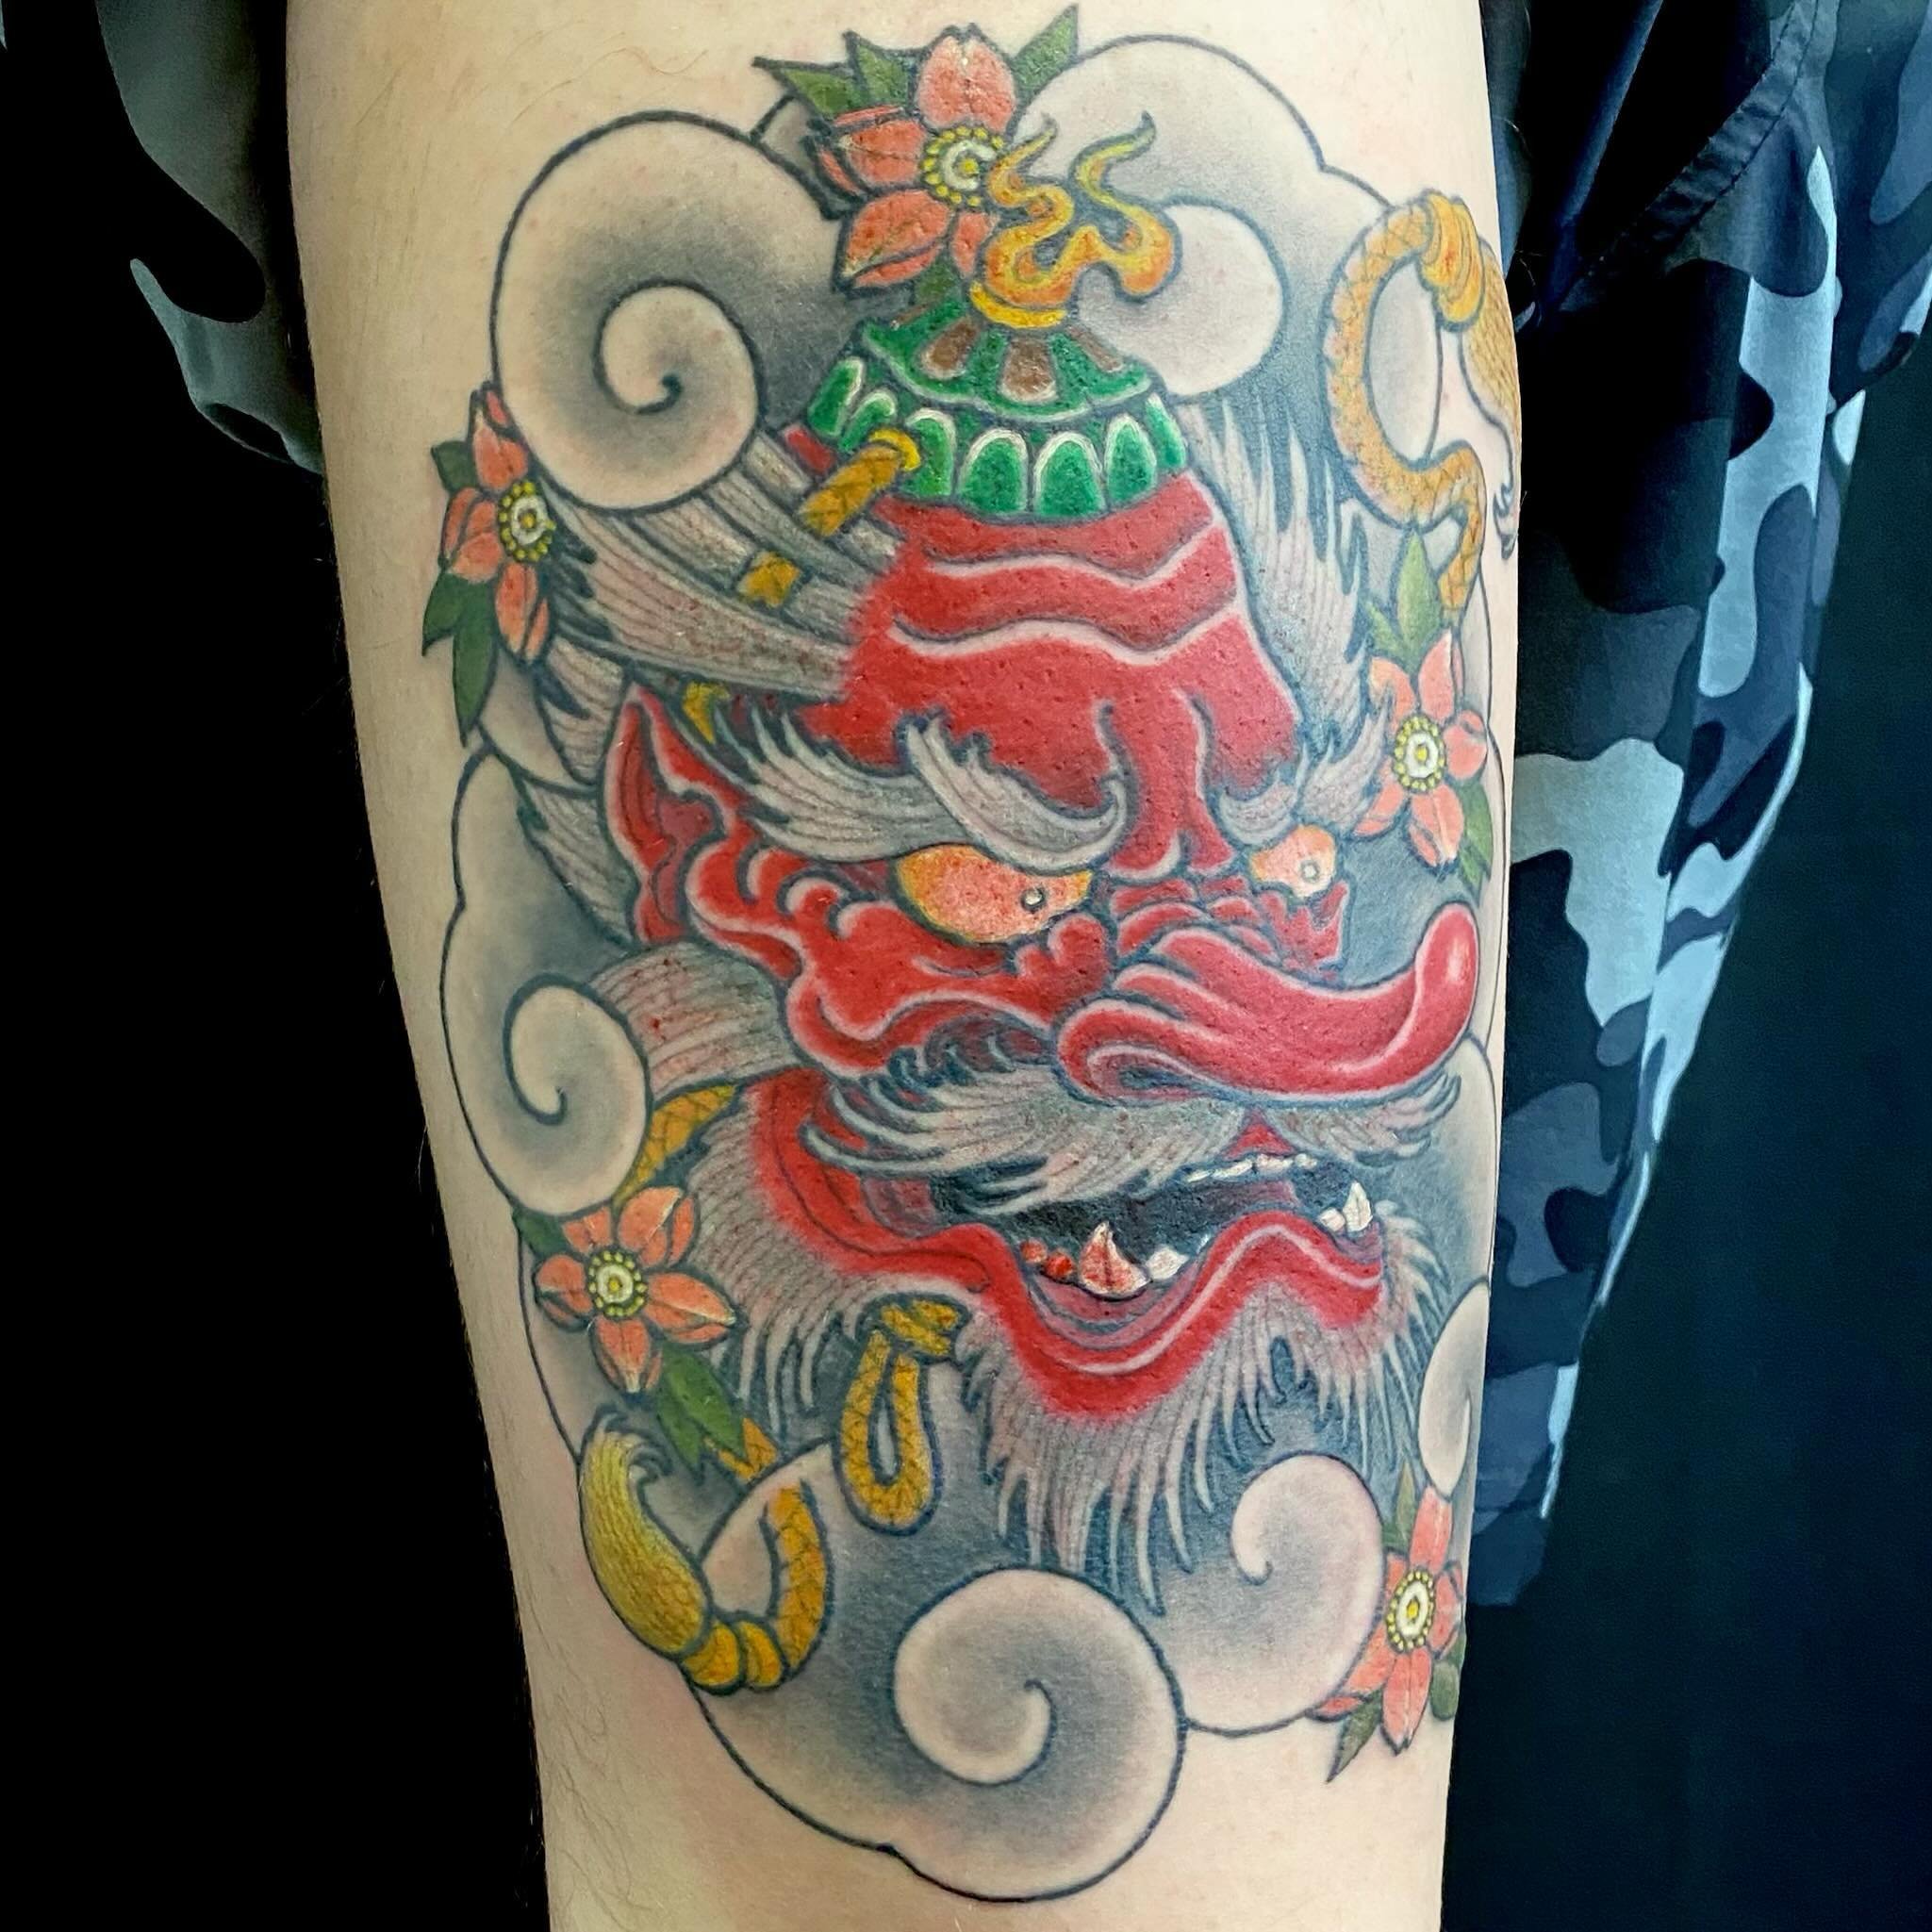 Tengu. 
.
.
.
.
.
.
.
.

#tattoo #tattoos #tattooed #tattooartist #cohenfloch  #victoriatattoo #yyjtattoo #vanisletattoo  #vancouvertattoo #tattoodo  #inked #刺青 #tattooworkers #tattoolife #tengu #japanesetattoo